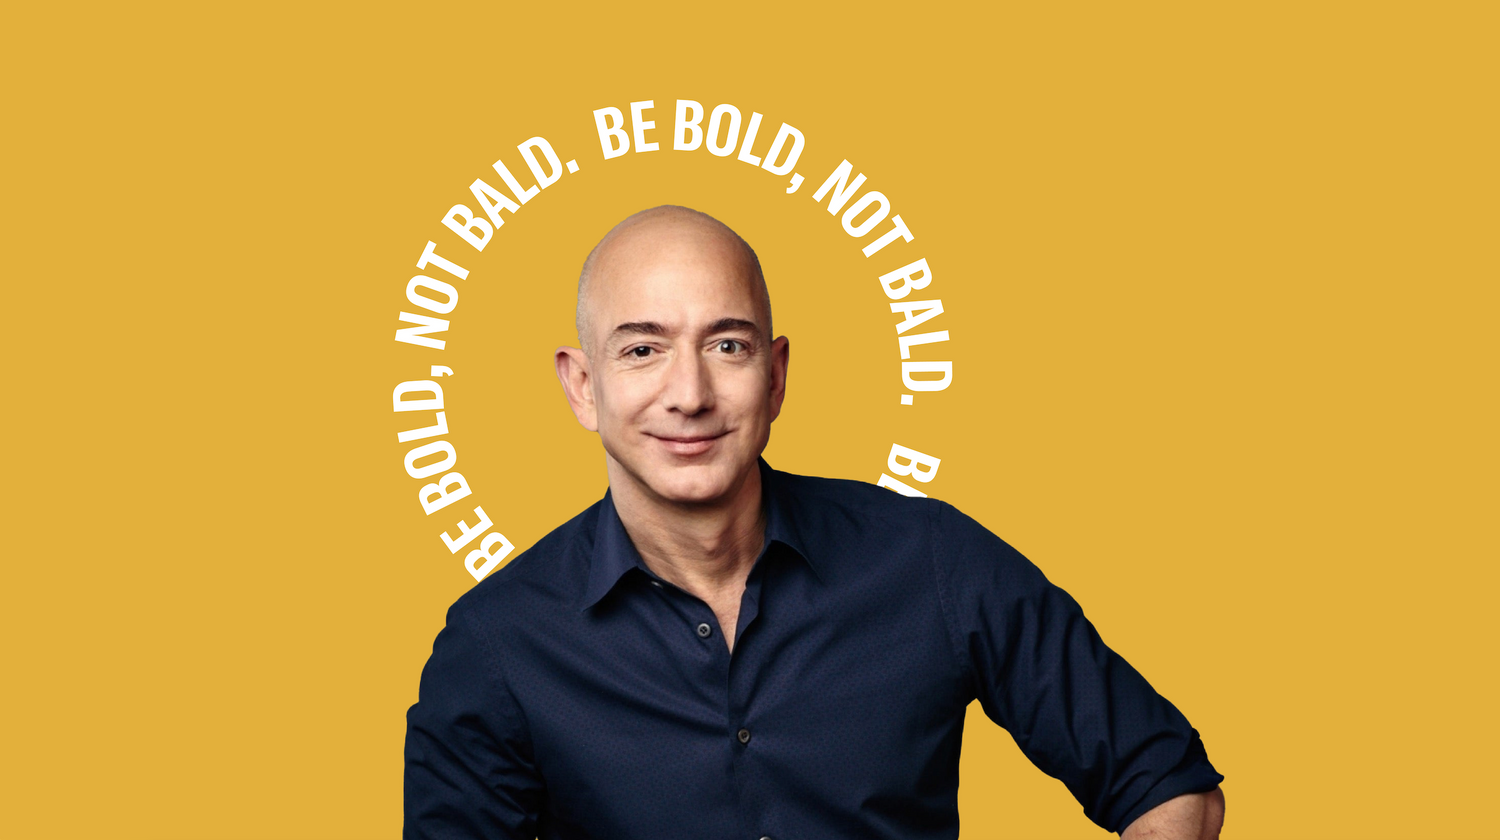 Why Is Jeff Bezos Bald?